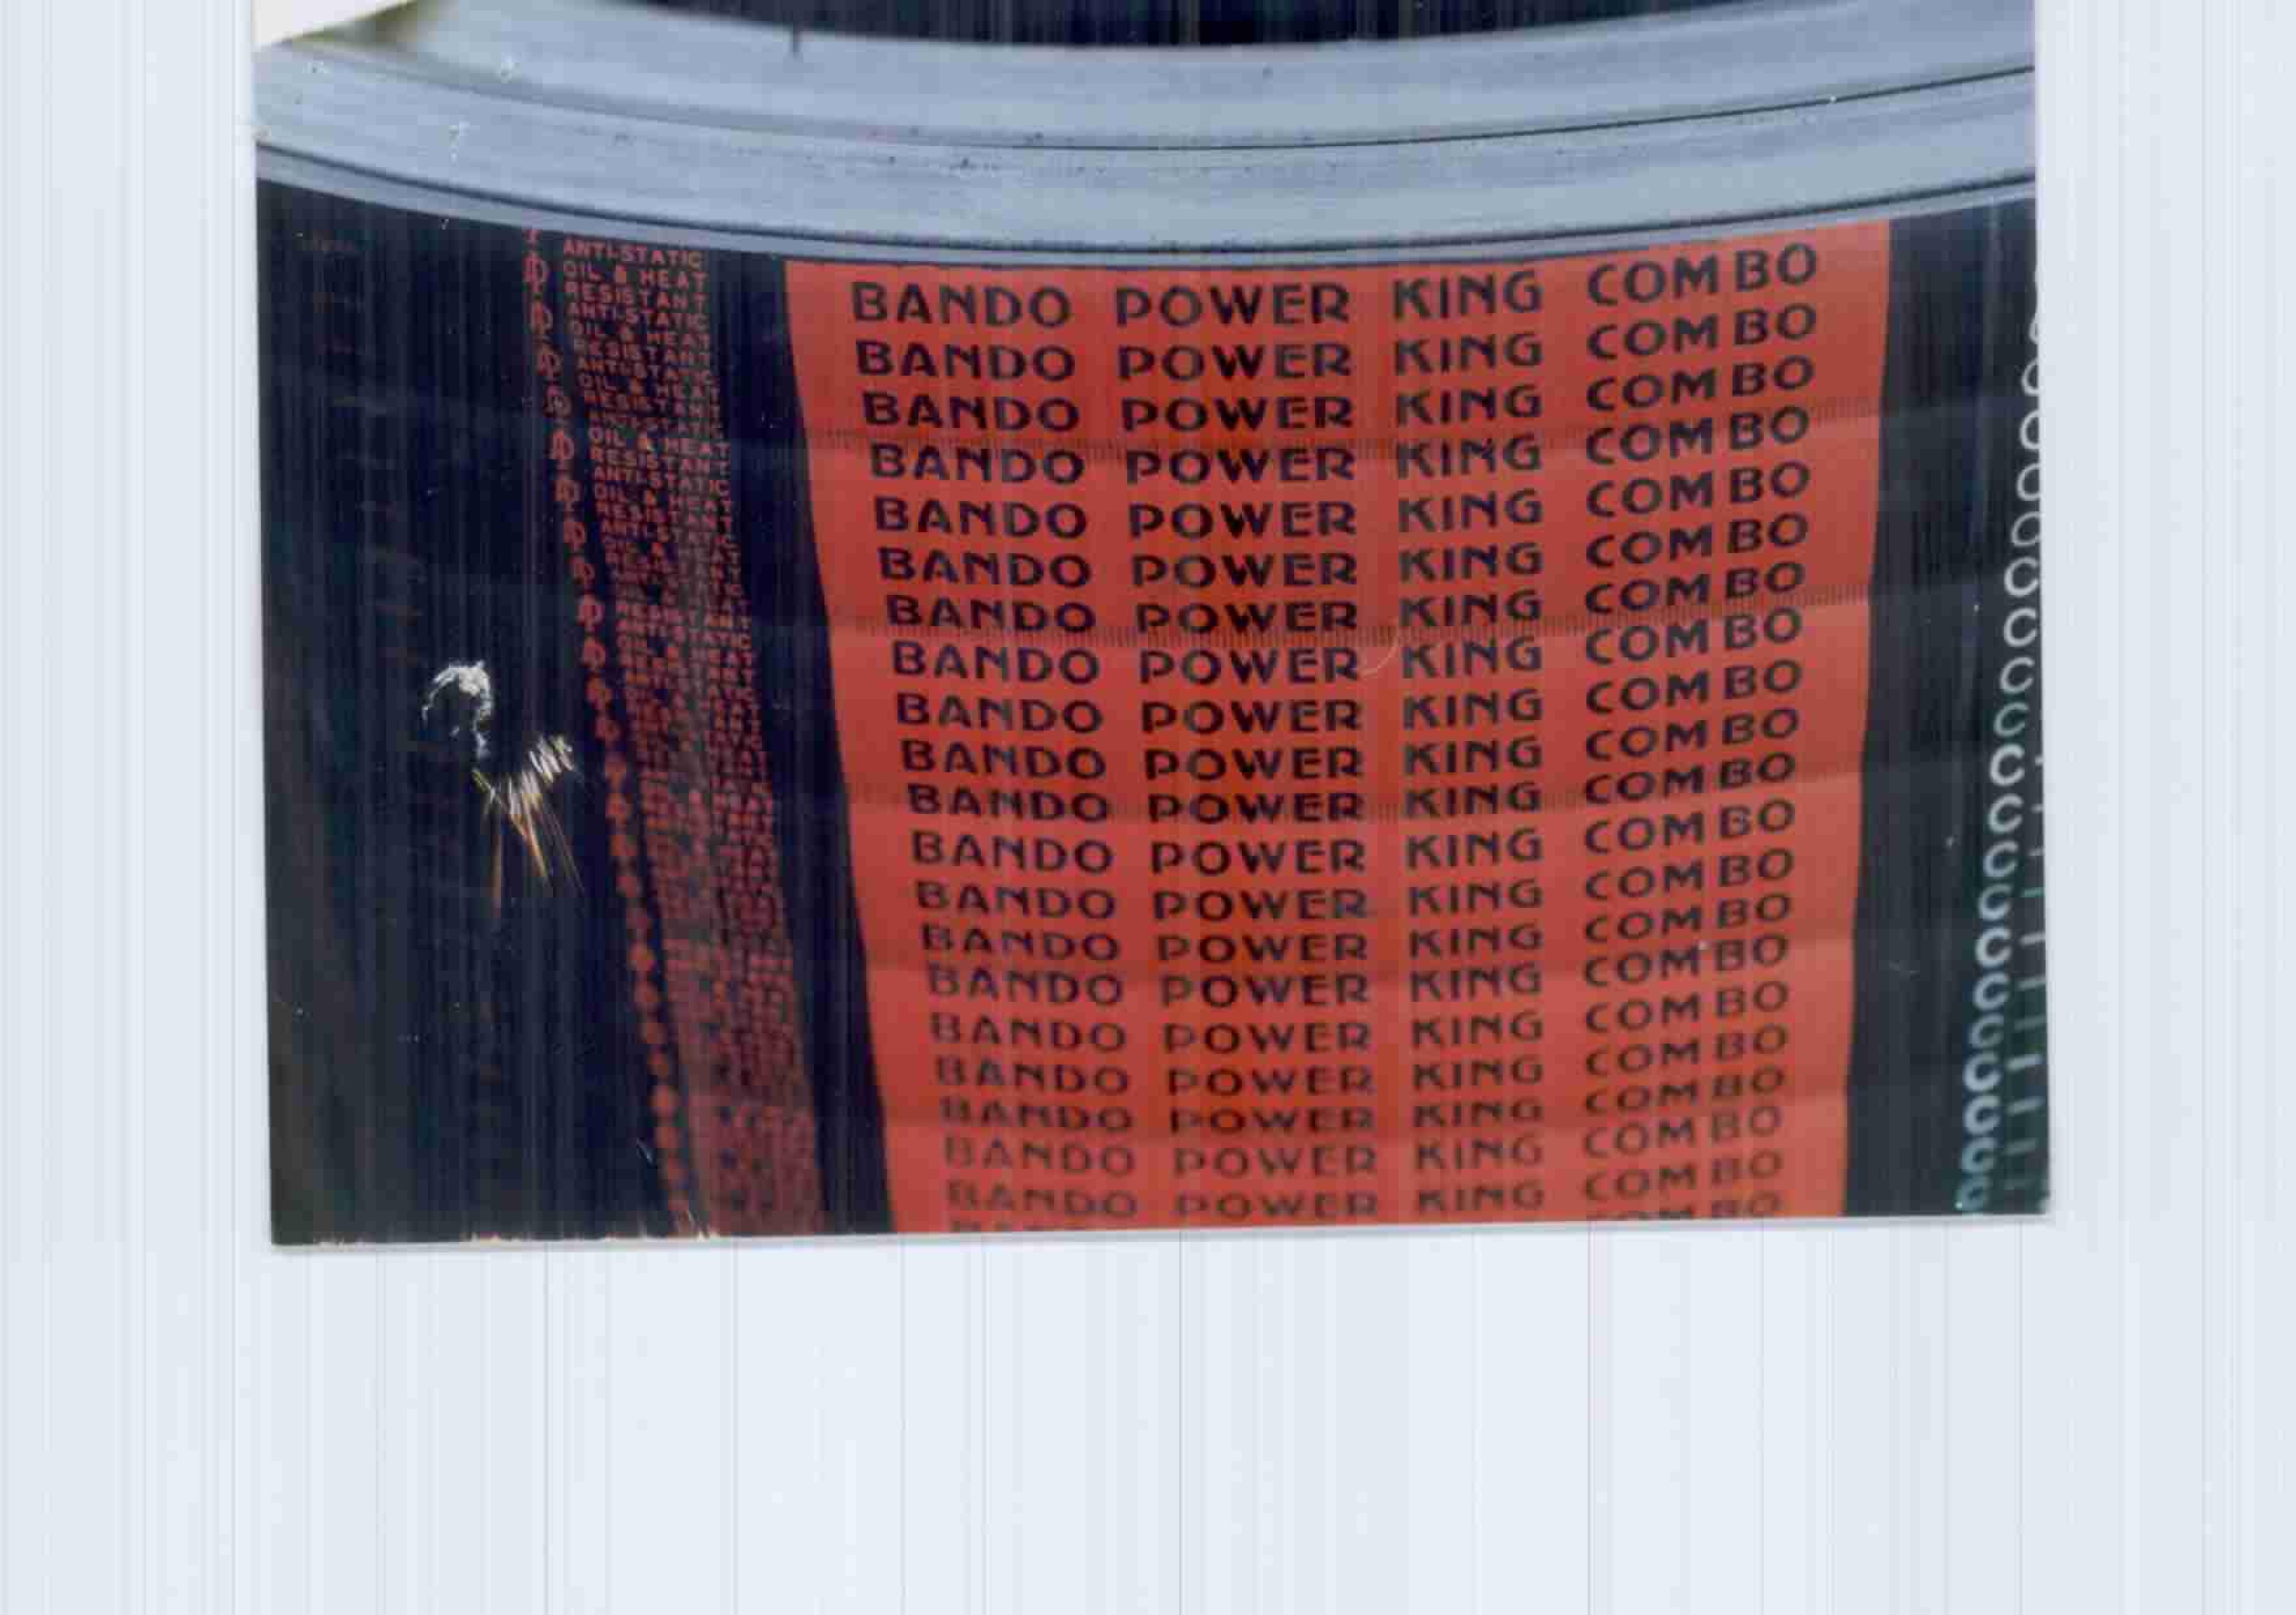  BANDO POWER KING COMBO